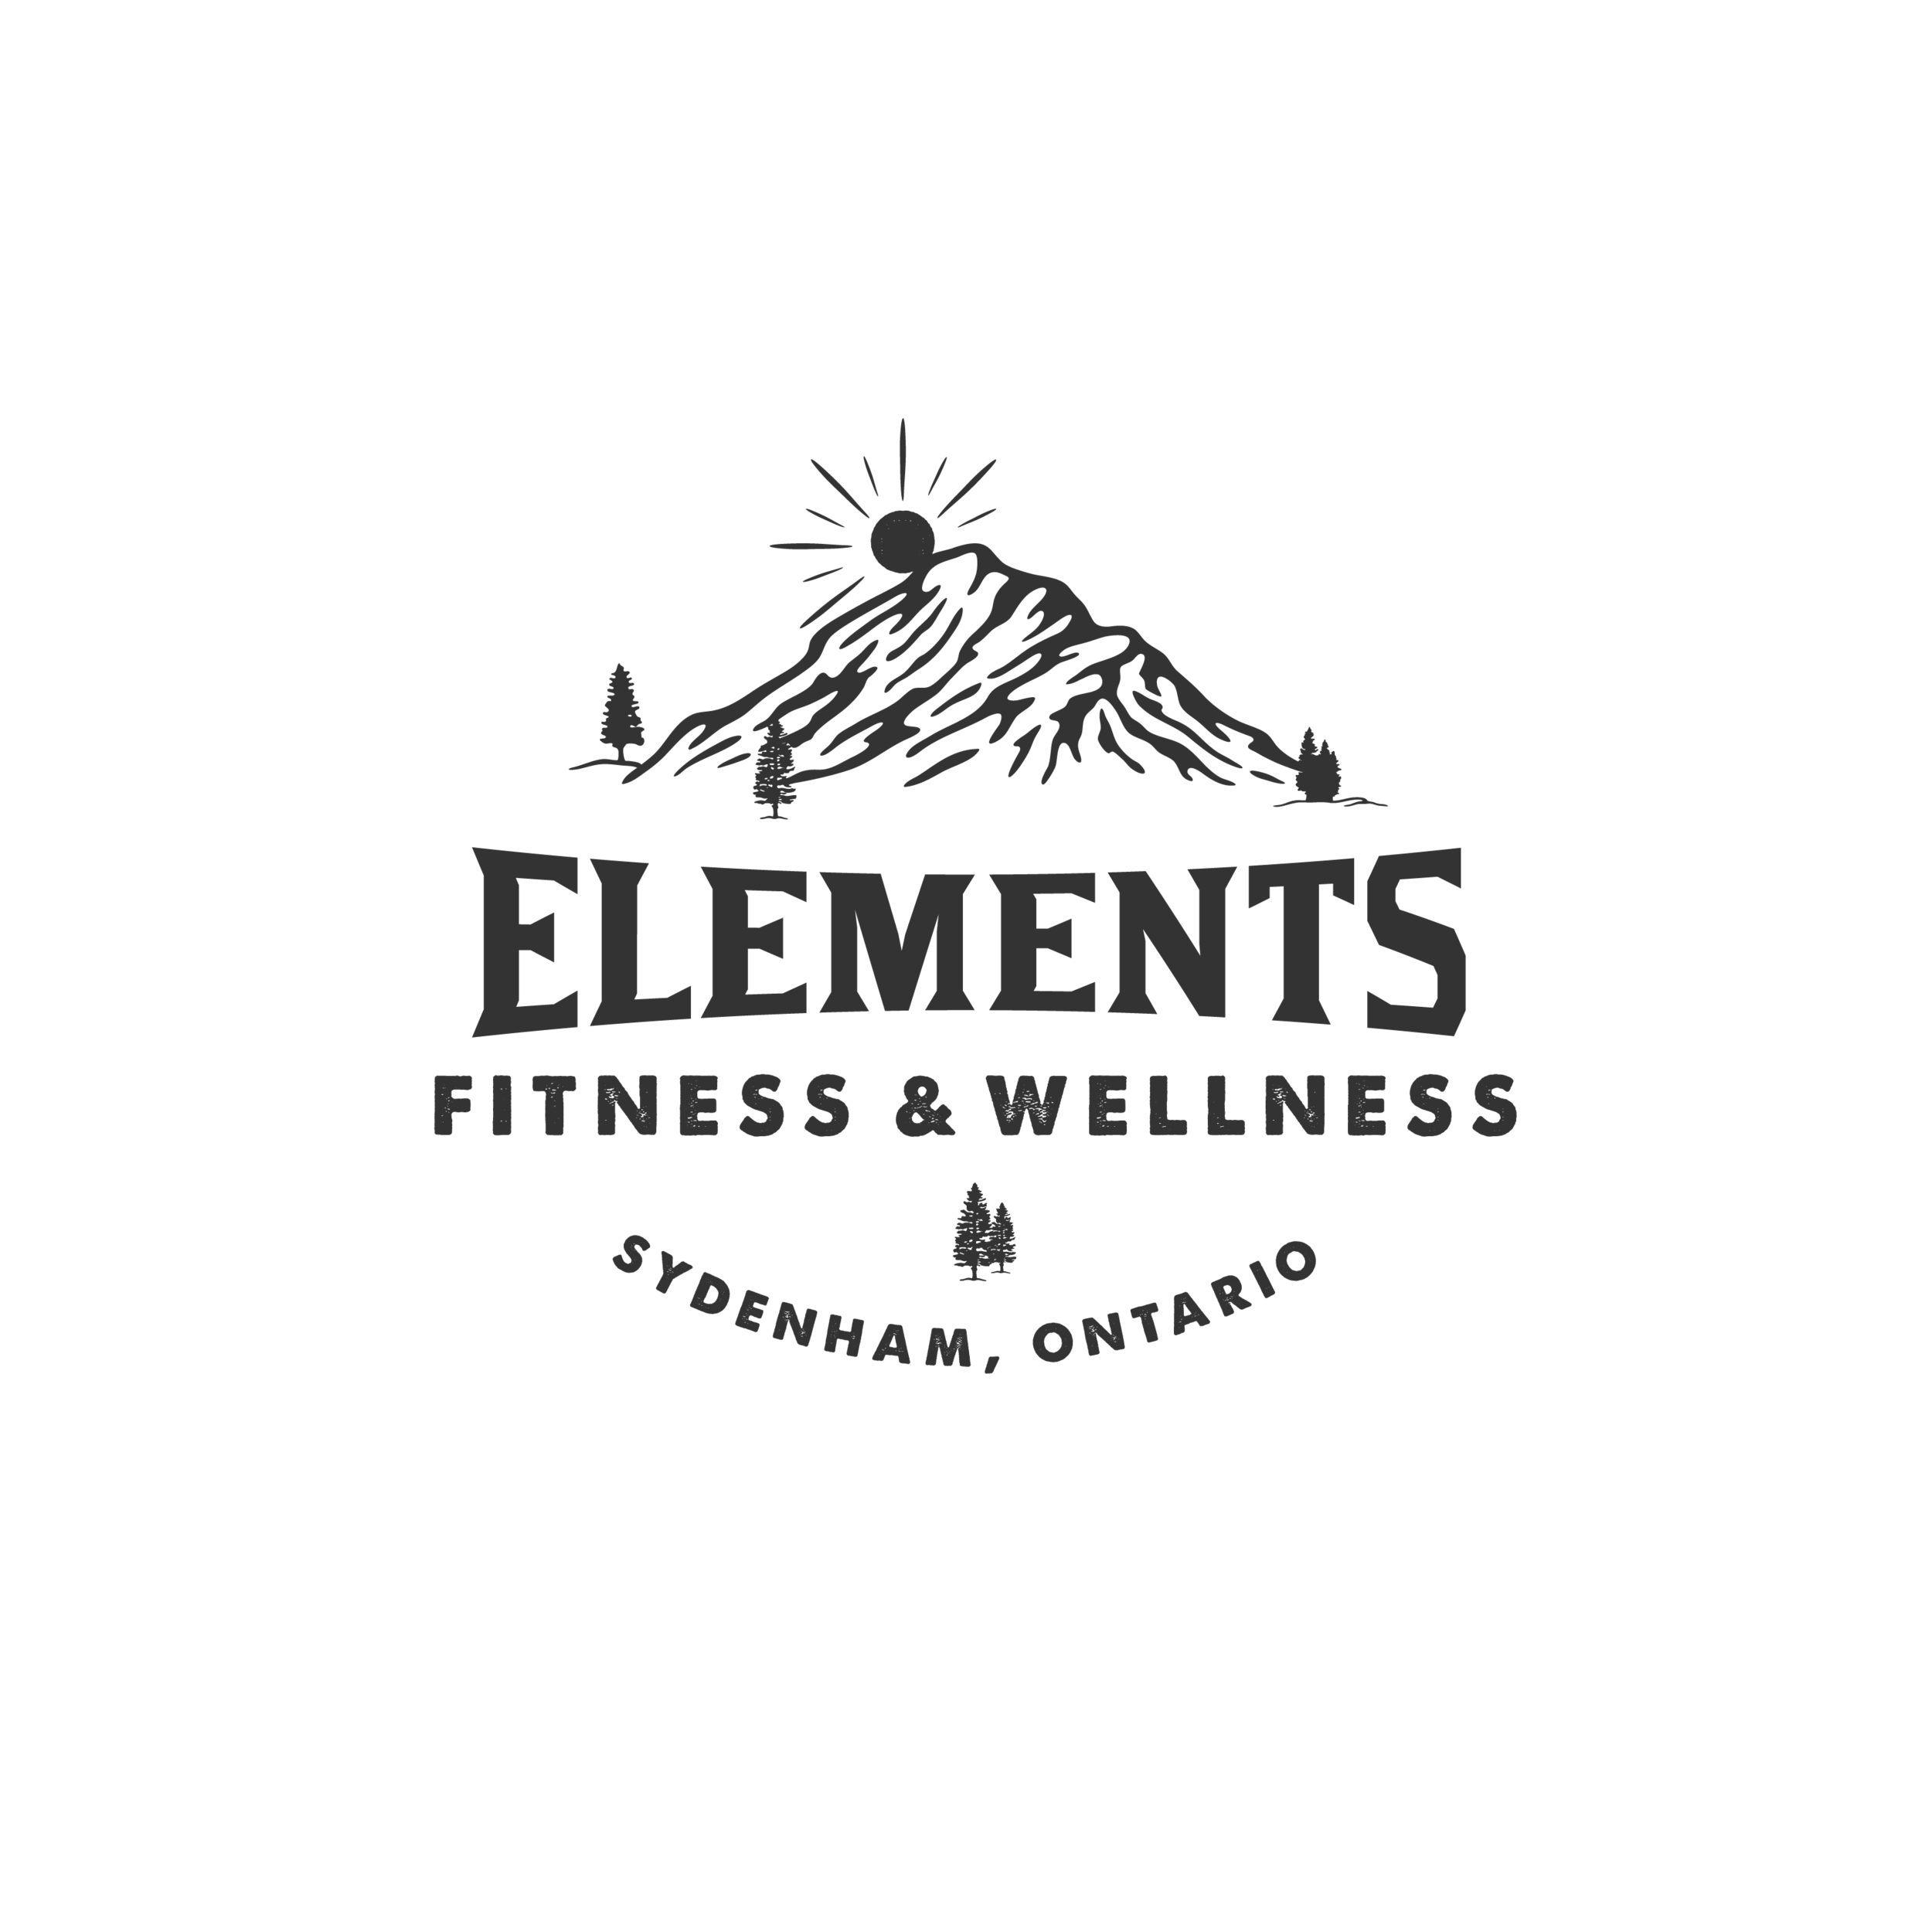 Elements Fitness & Wellness